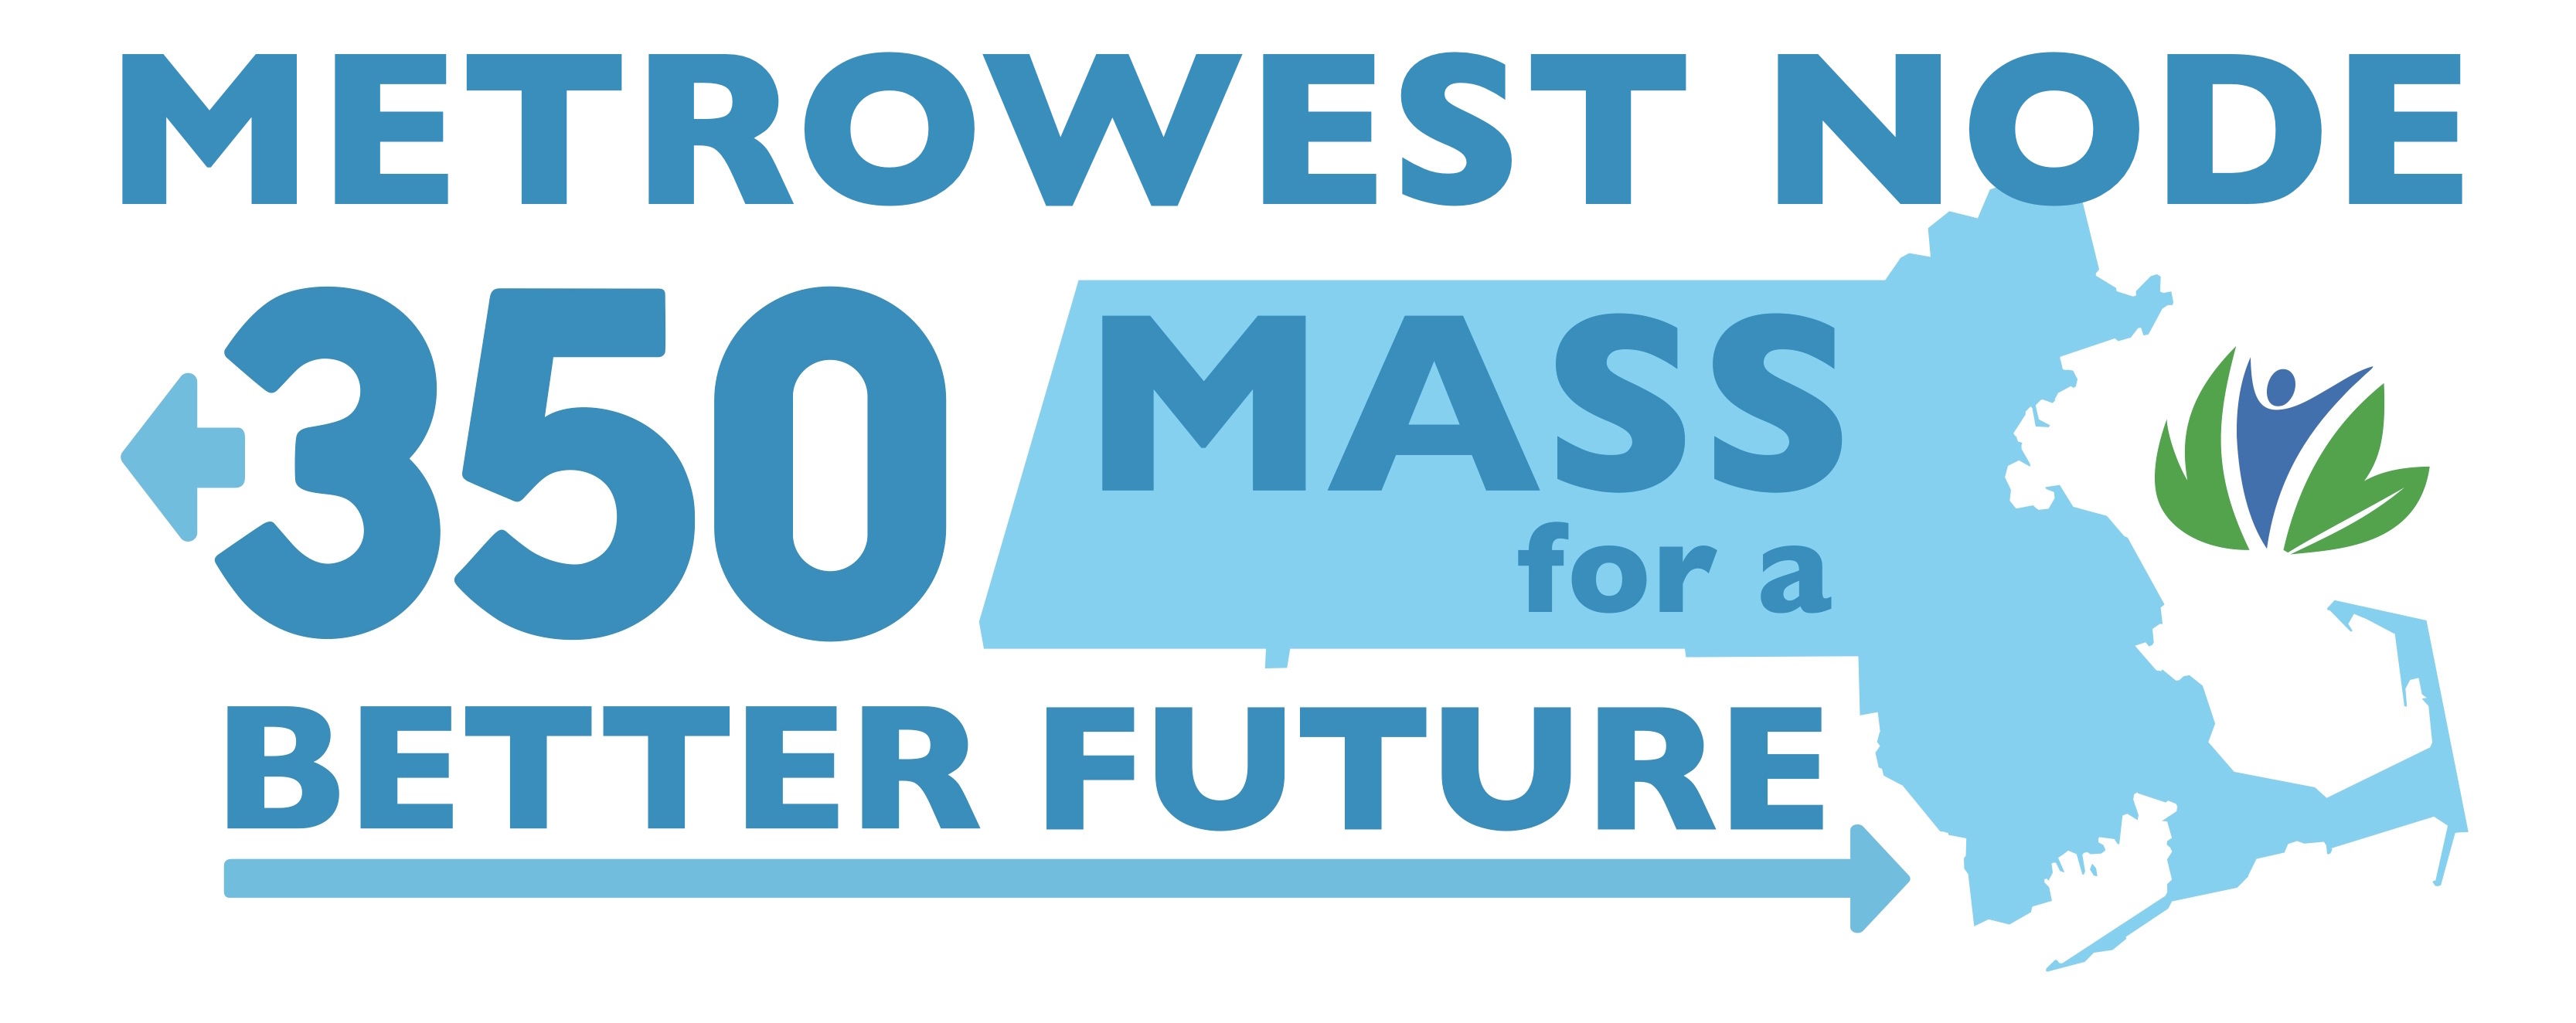 350 Massachusetts: MetroWest Node